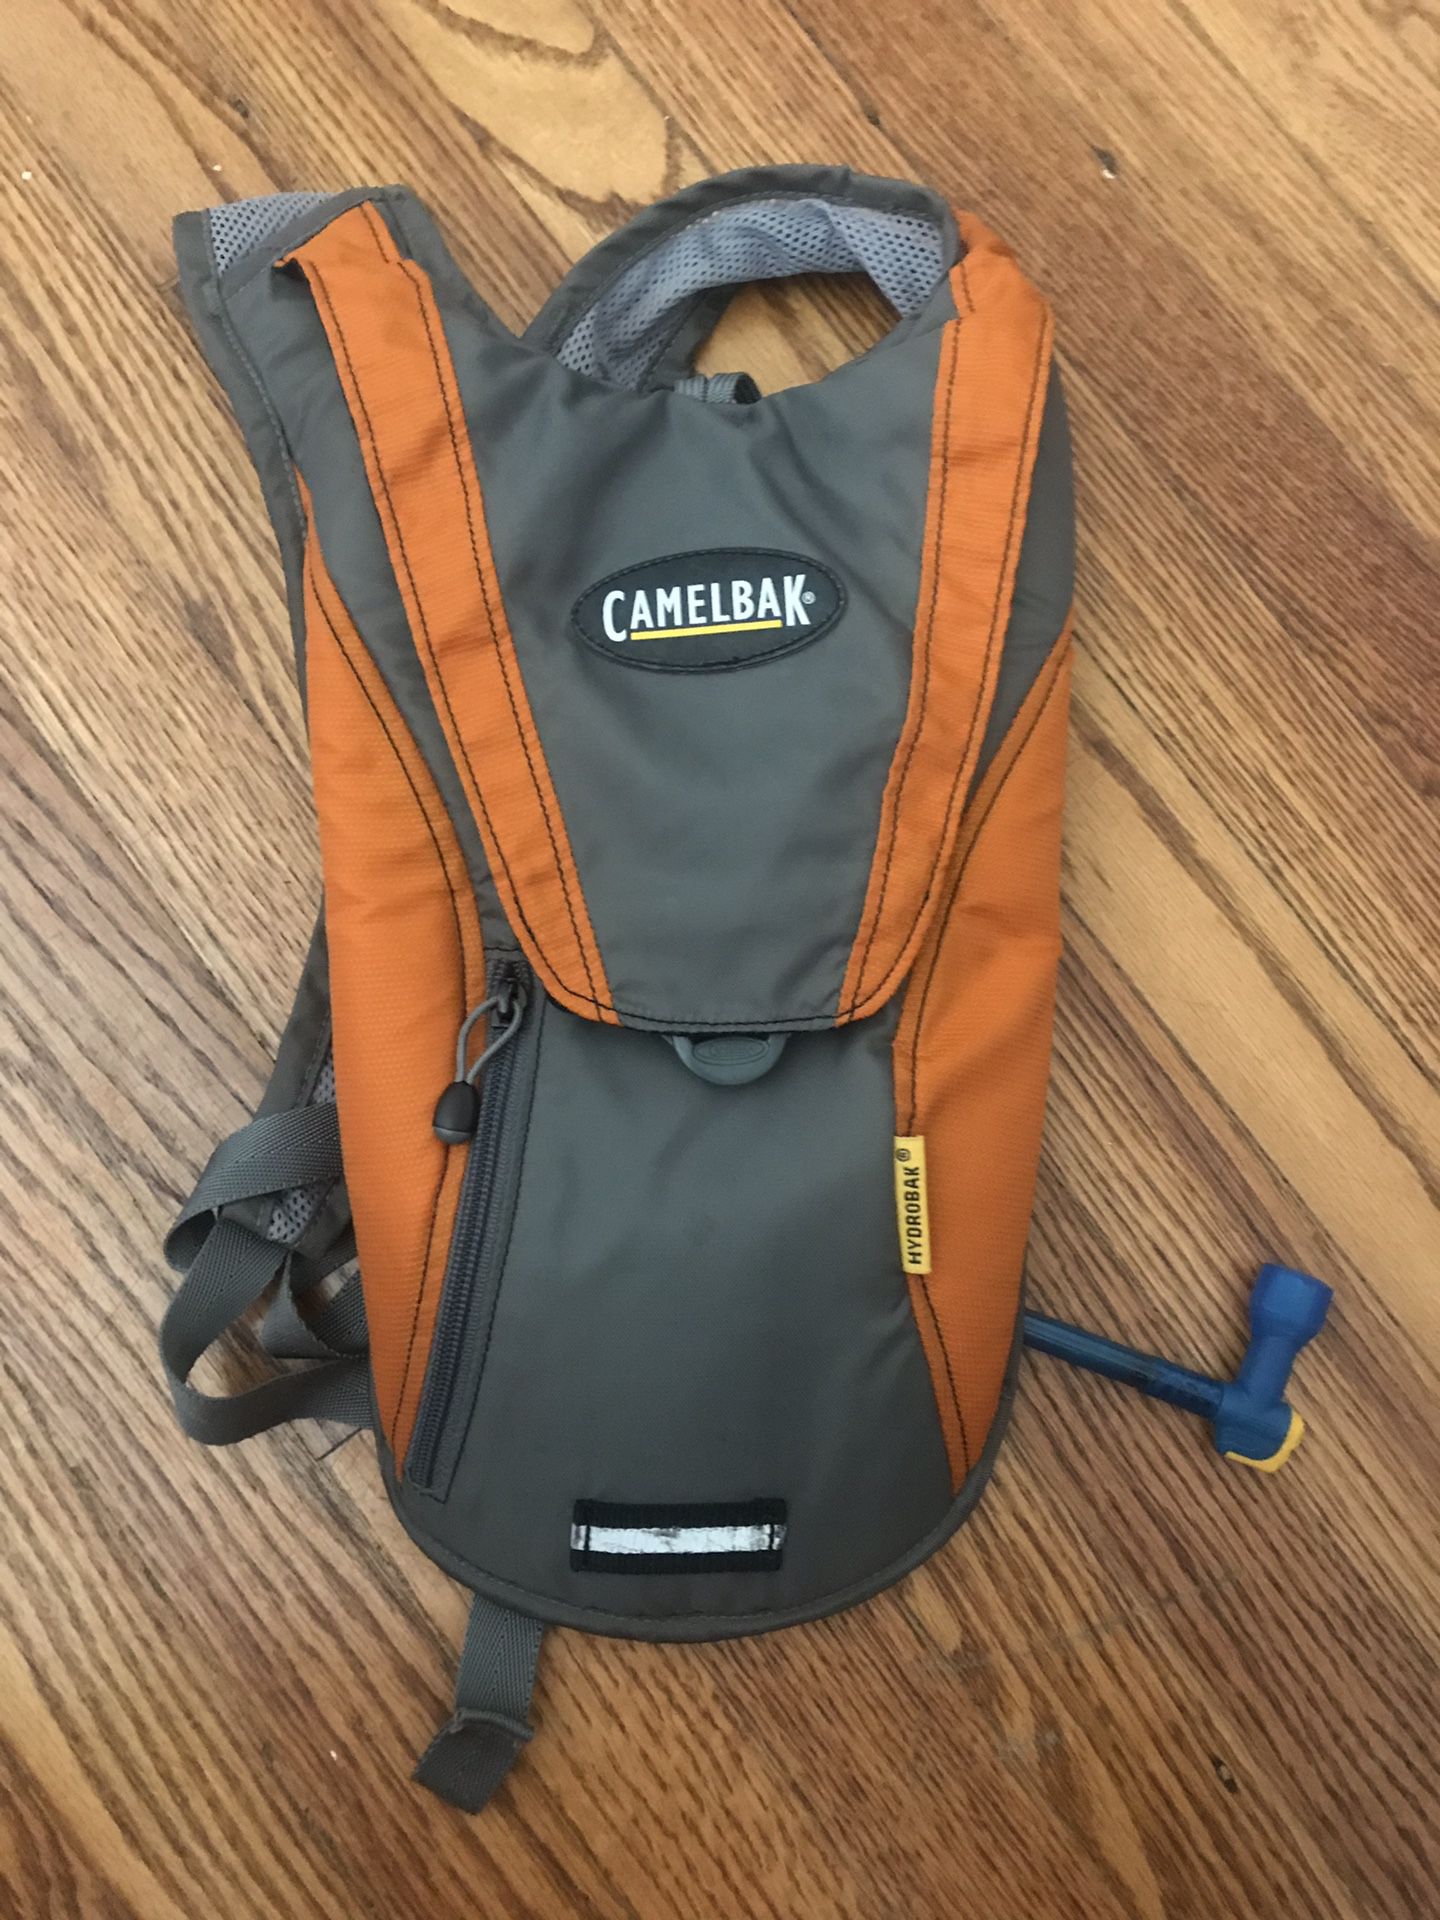 CamelBak HydroBak (water backpack)